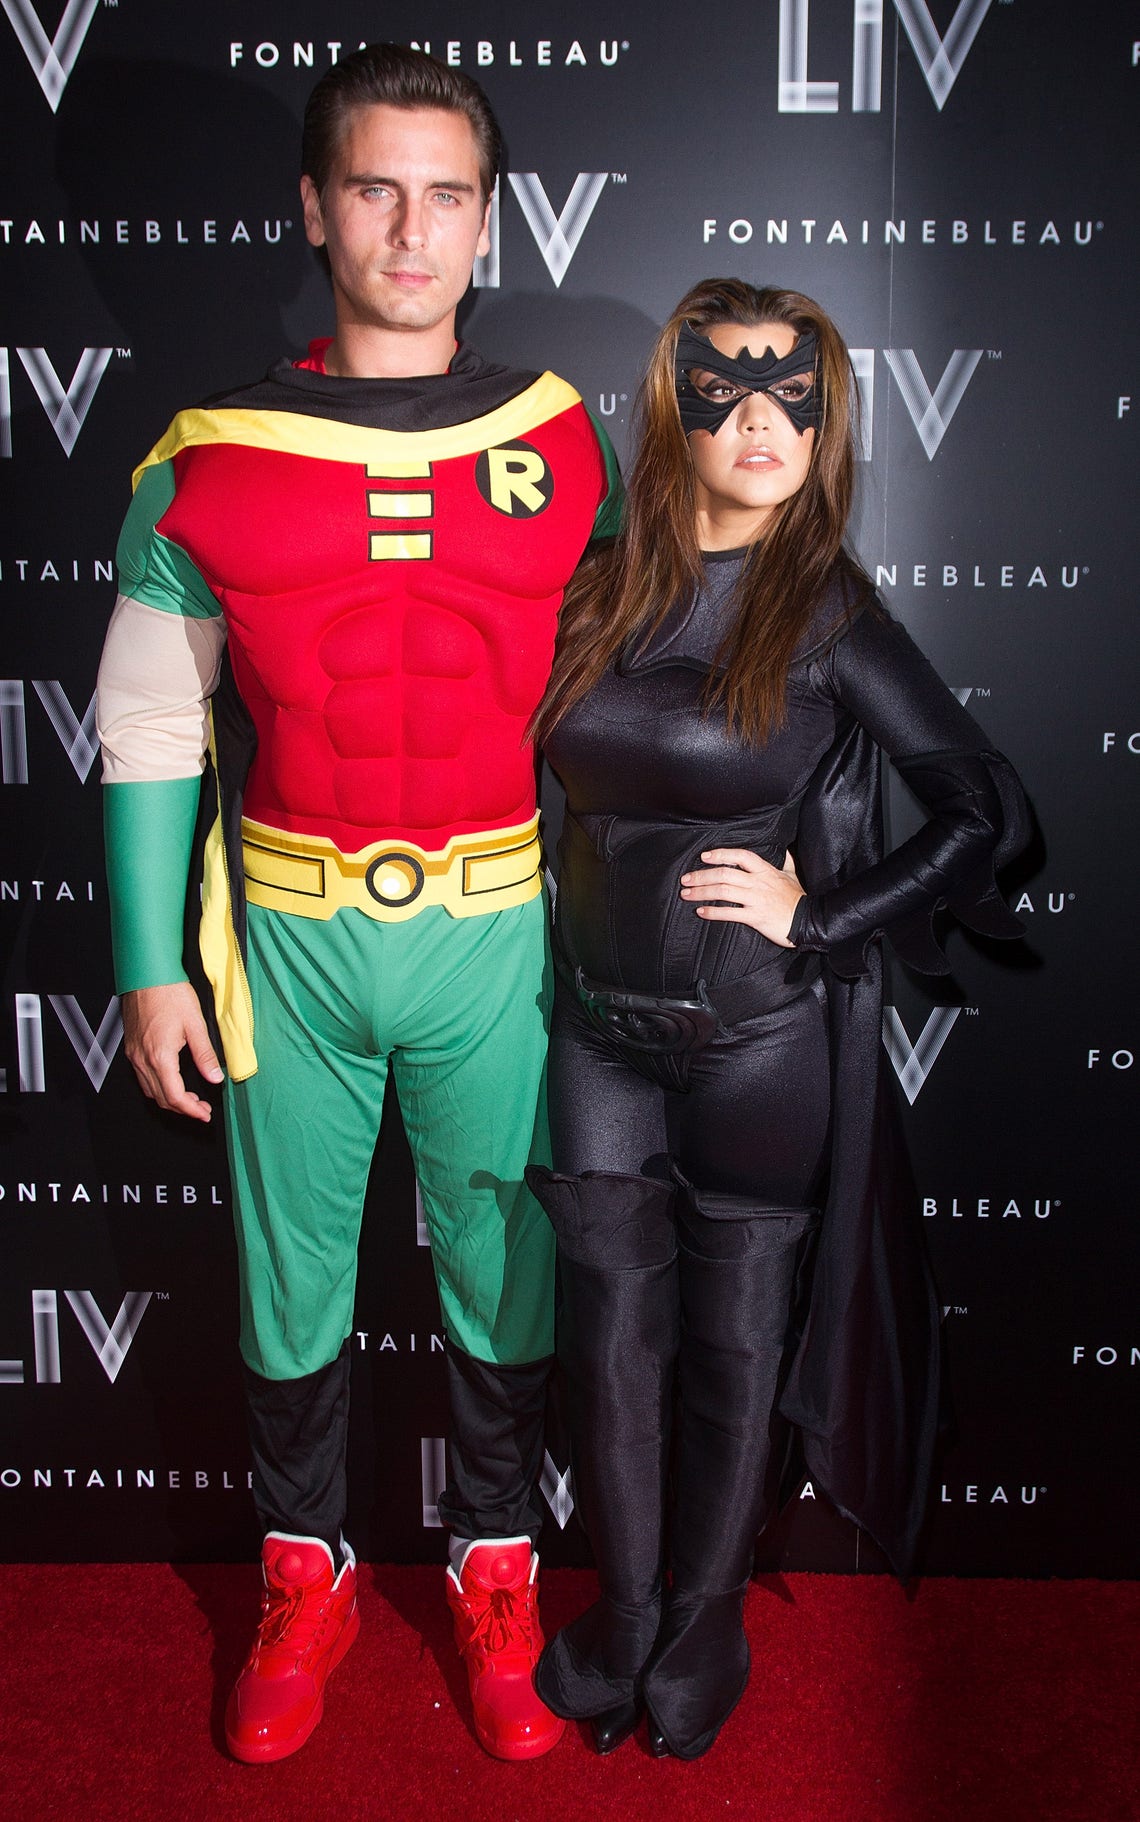 Batman & Catwoman Couples Costumes